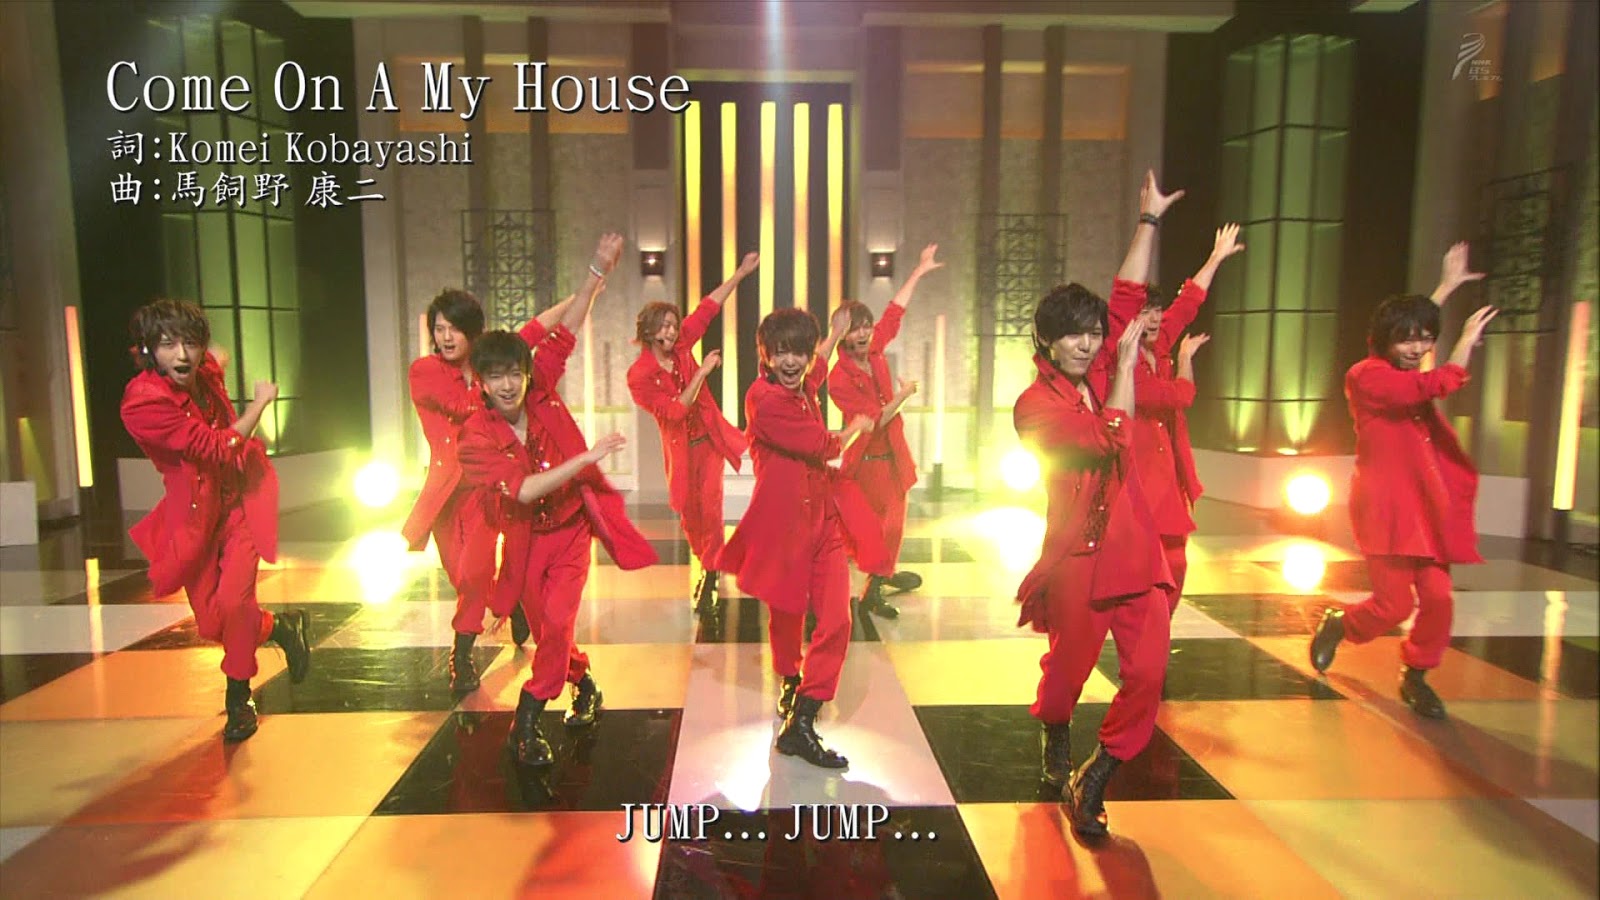 Aika Desu Hey Say Jump Come On A My House Bounce Performances On Shokura Premium Download